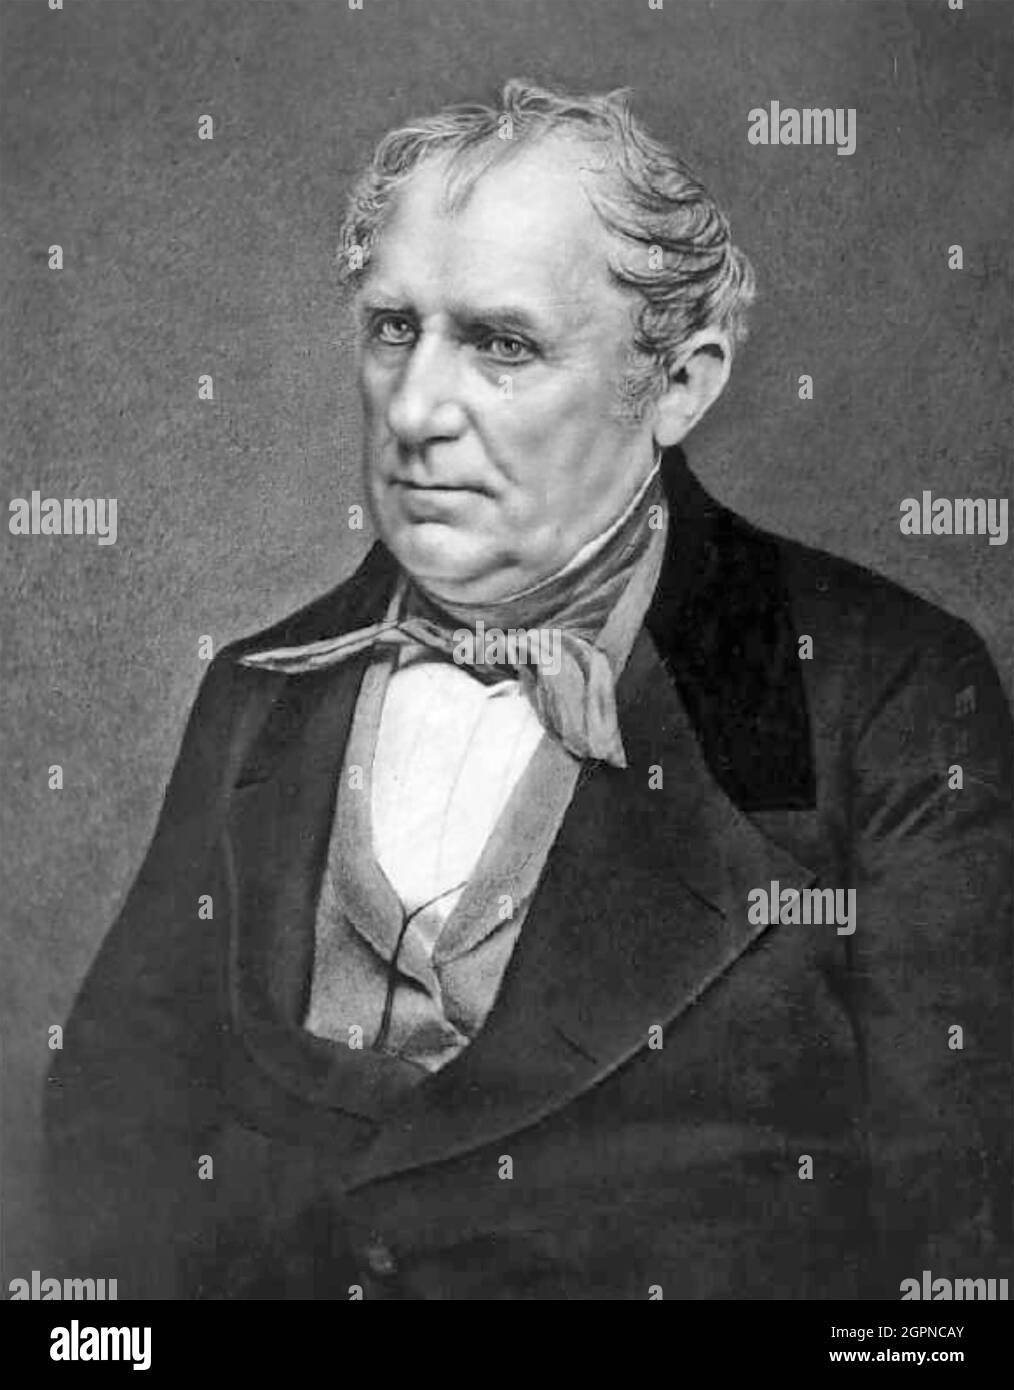 JAMES FENIMORE COOPER (1789-1851) novelista estadounidense fotografiado por Matthew Brady en 1850 Foto de stock